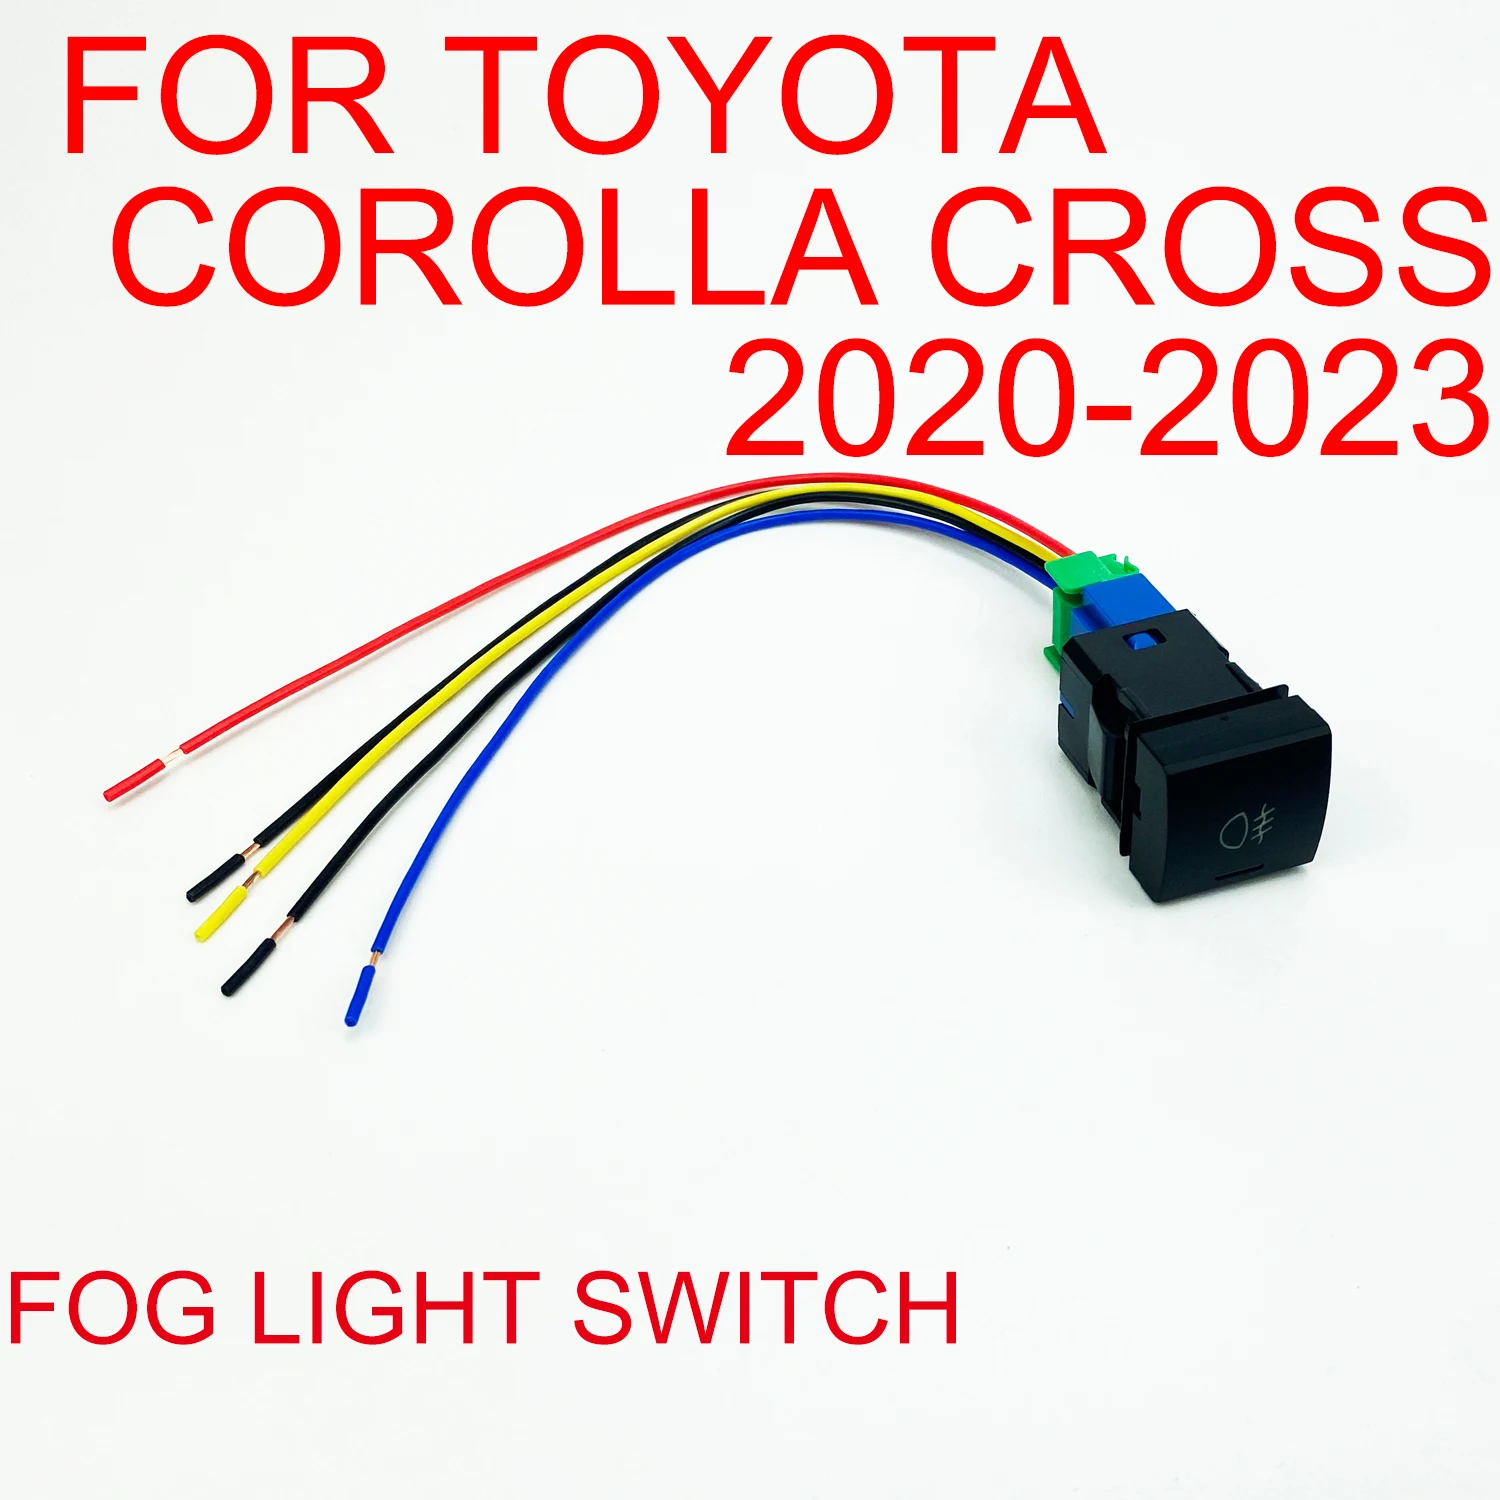 DC 12V Push Button Front Fog Light Switch For Toyota Corolla Hatchback 2019-2022 / Corolla Cross 2020-2023